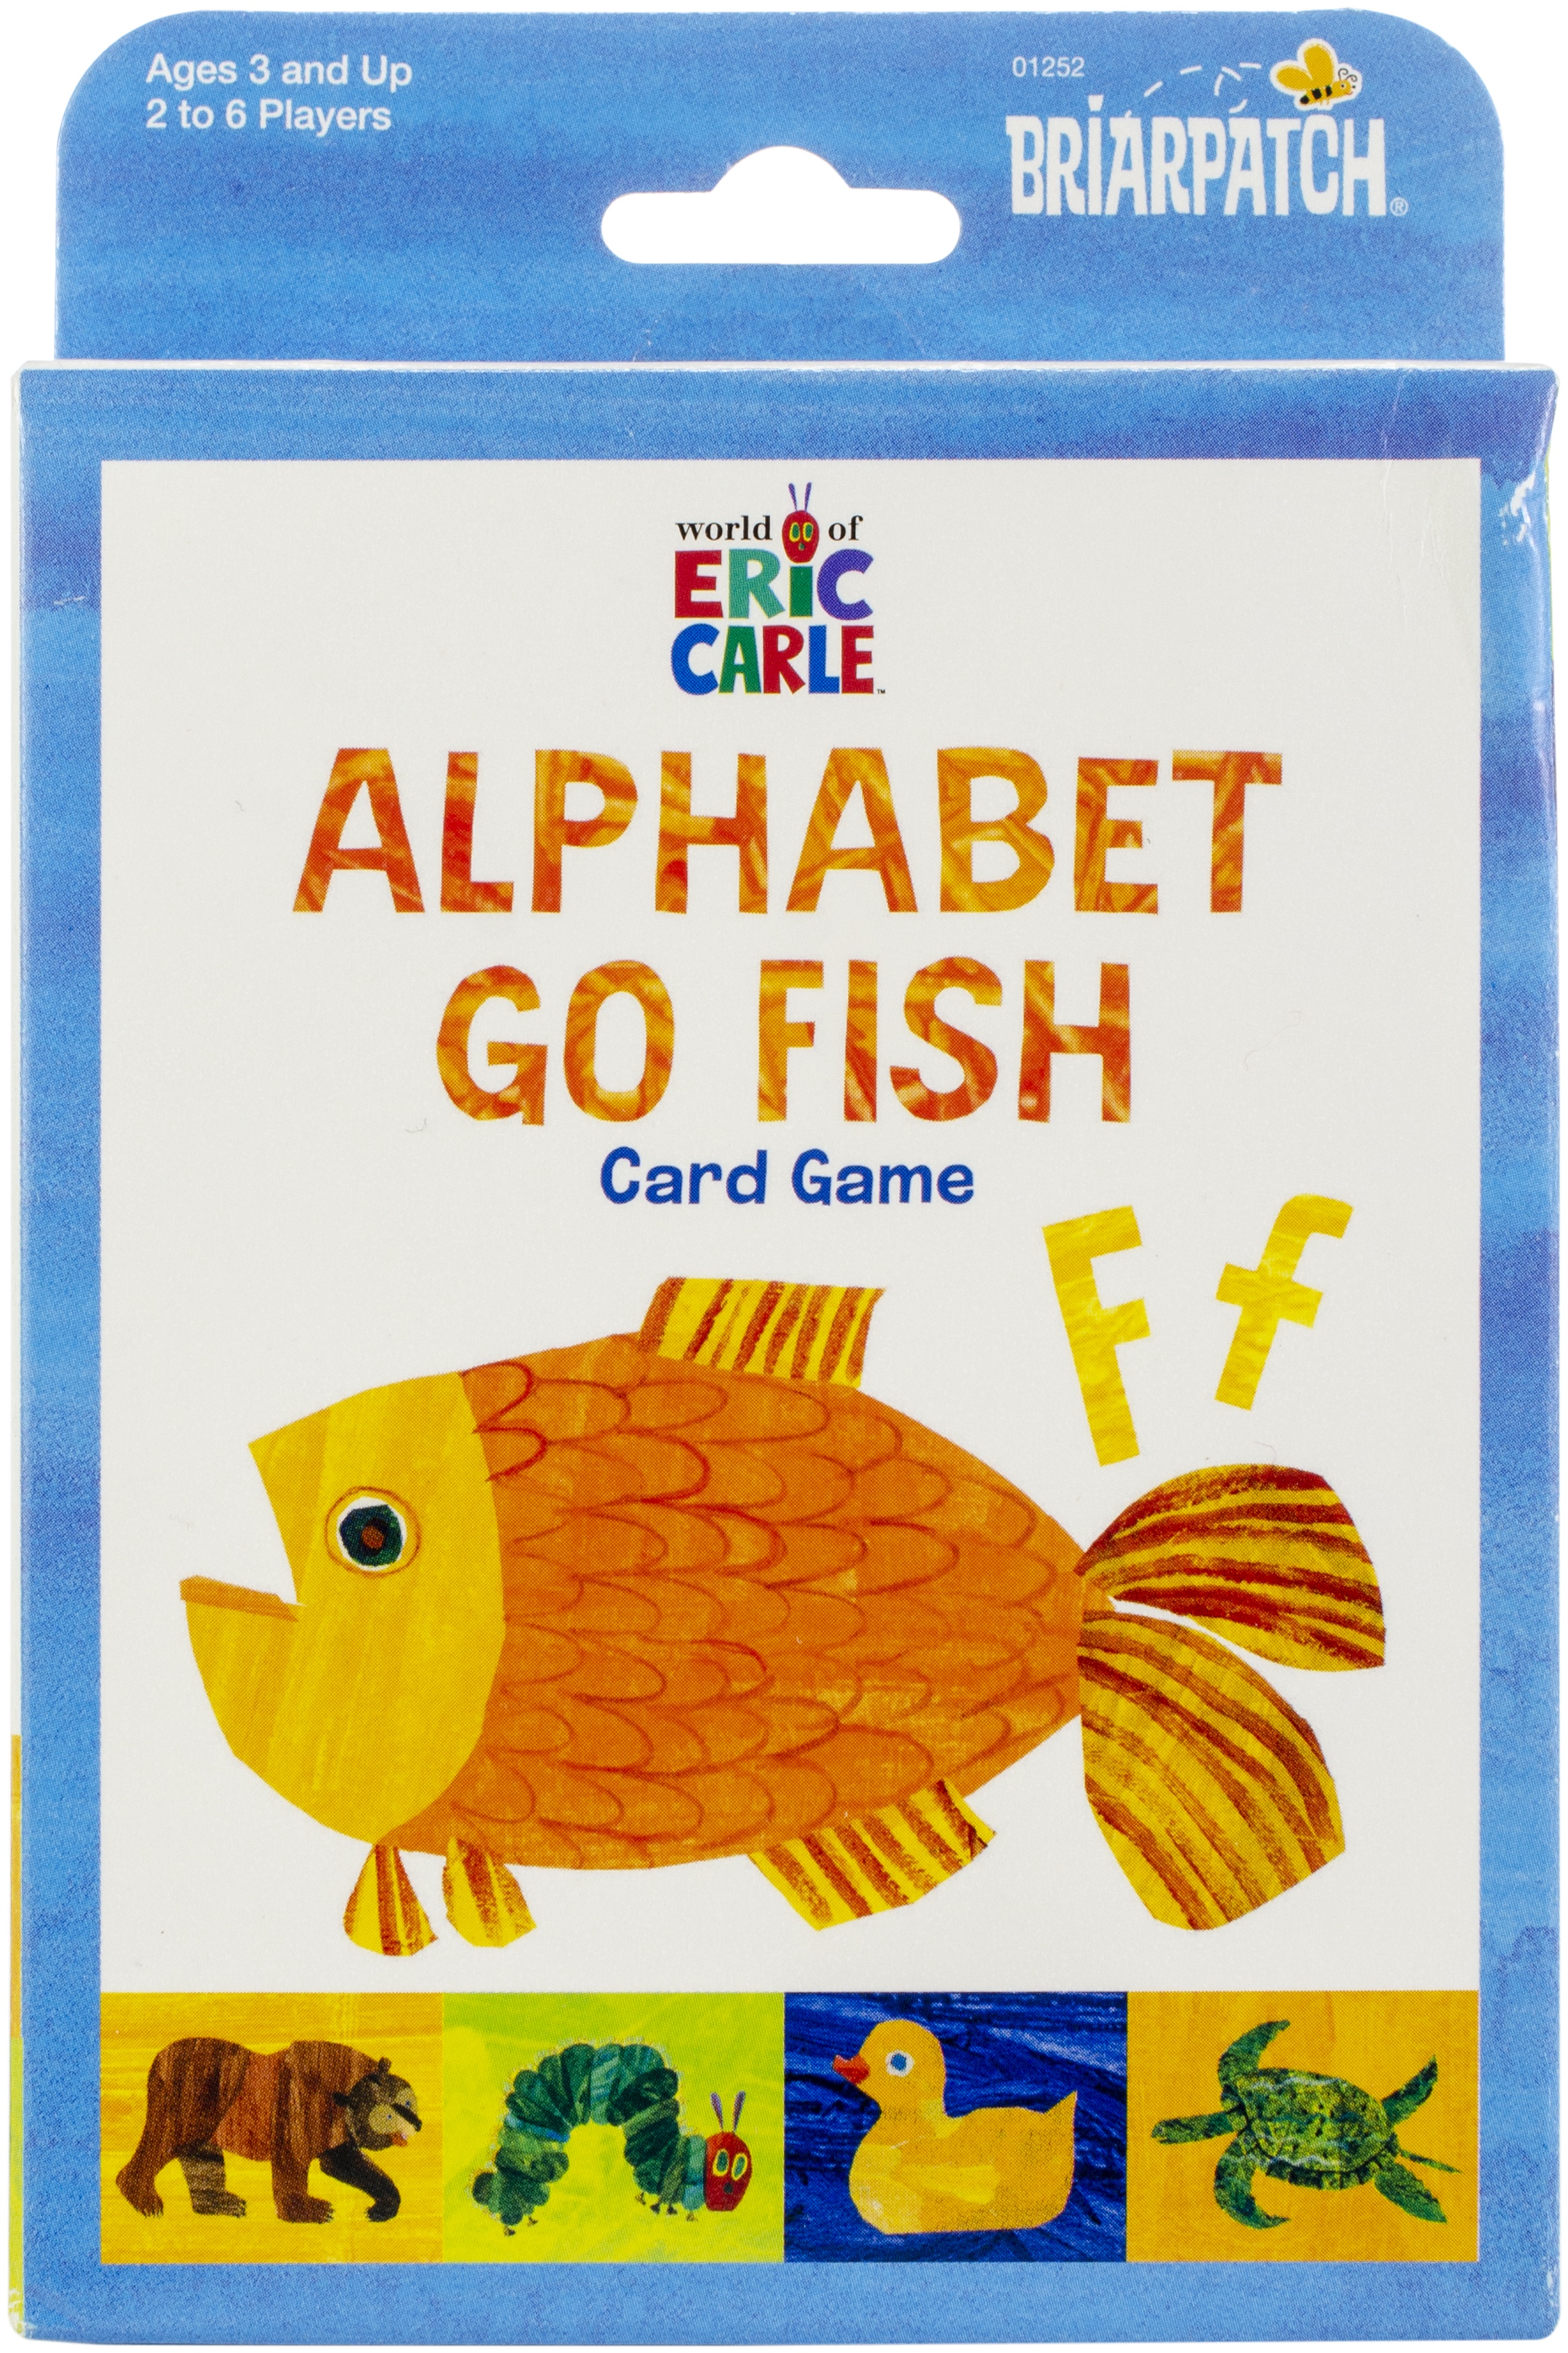 eric-carle-alphabet-go-fish-card-game-794764012521-ebay